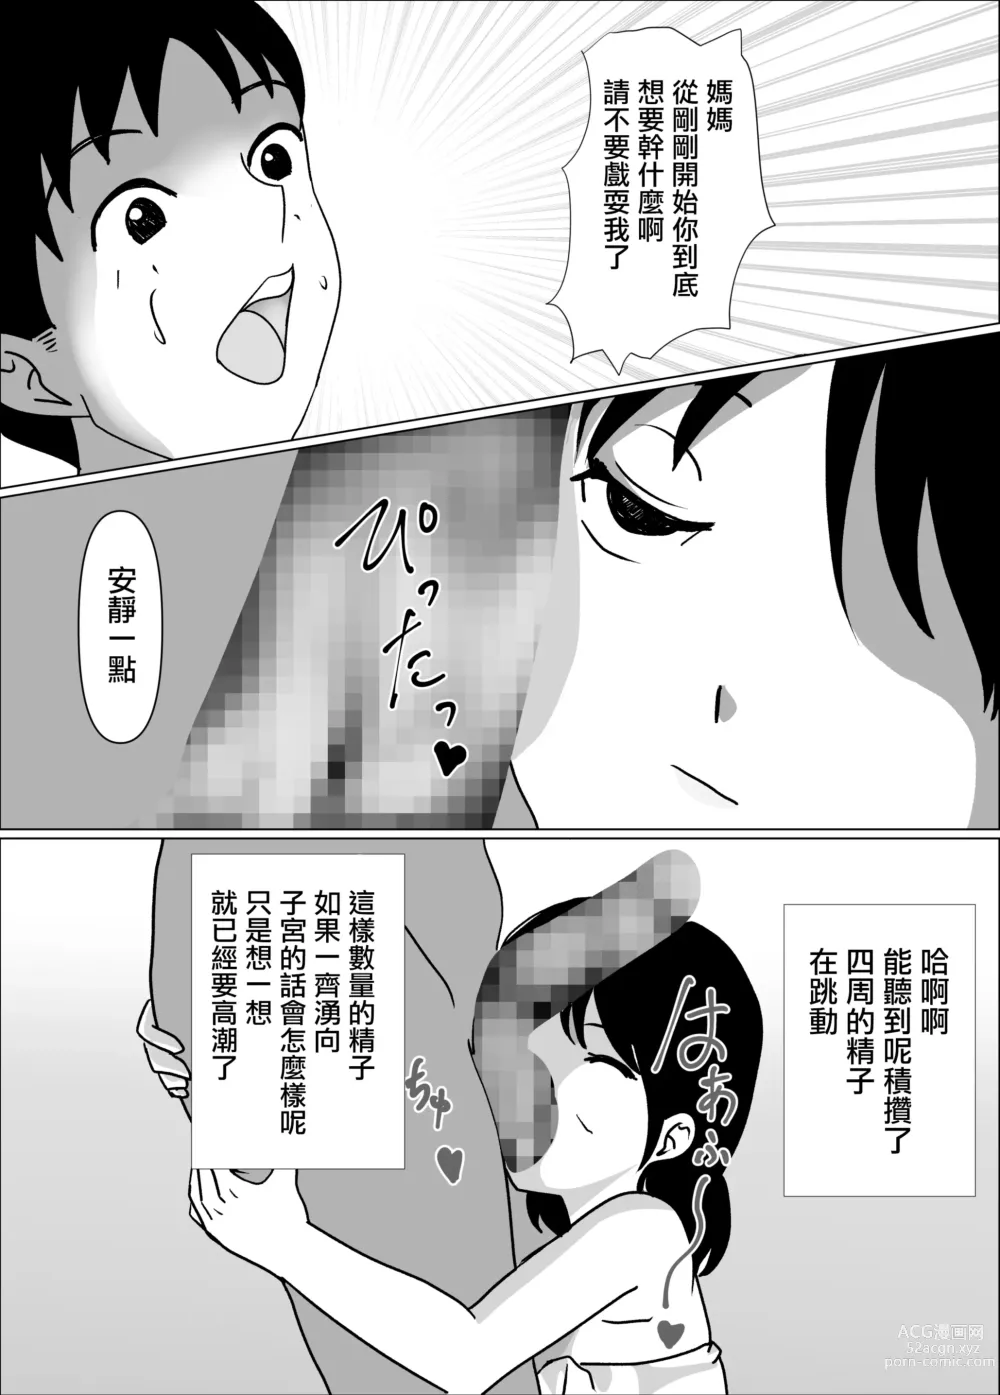 Page 13 of doujinshi 為了在妻子的排卵日授精而攢的精子被丈母娘看上了